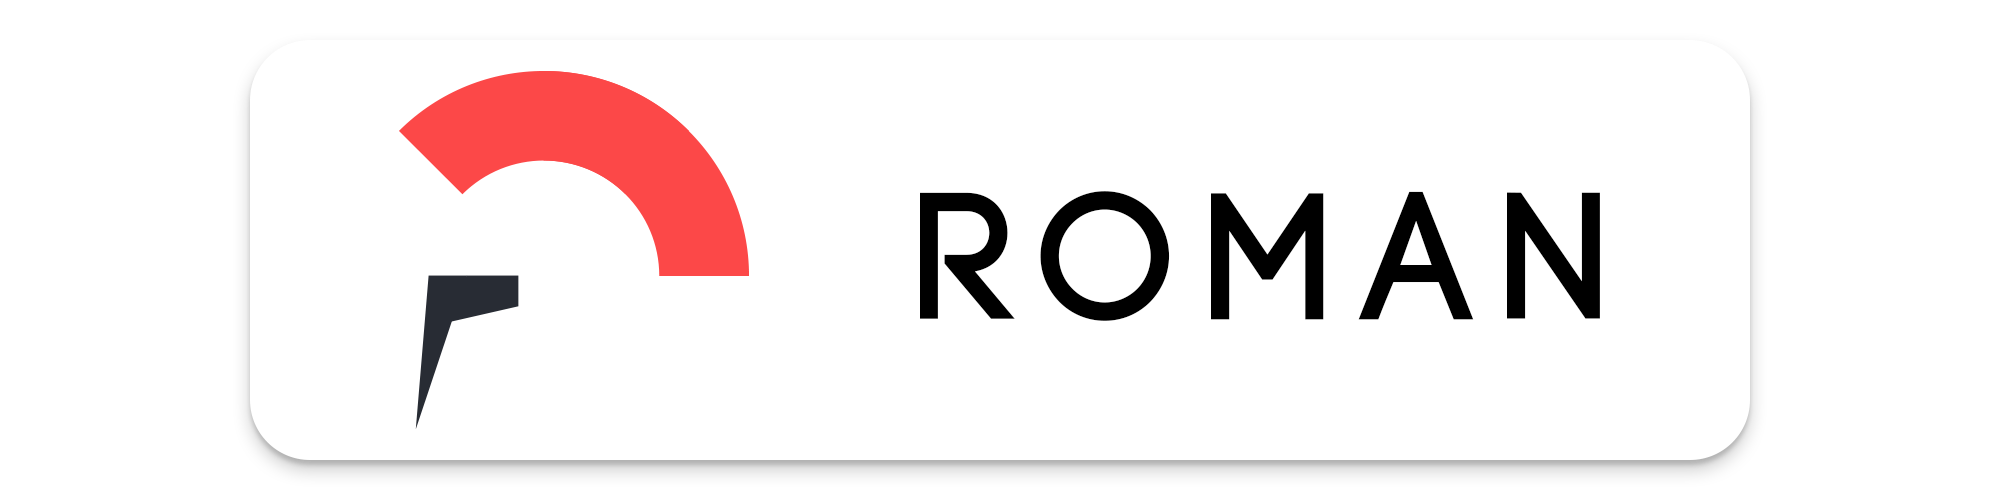 Roman Banner